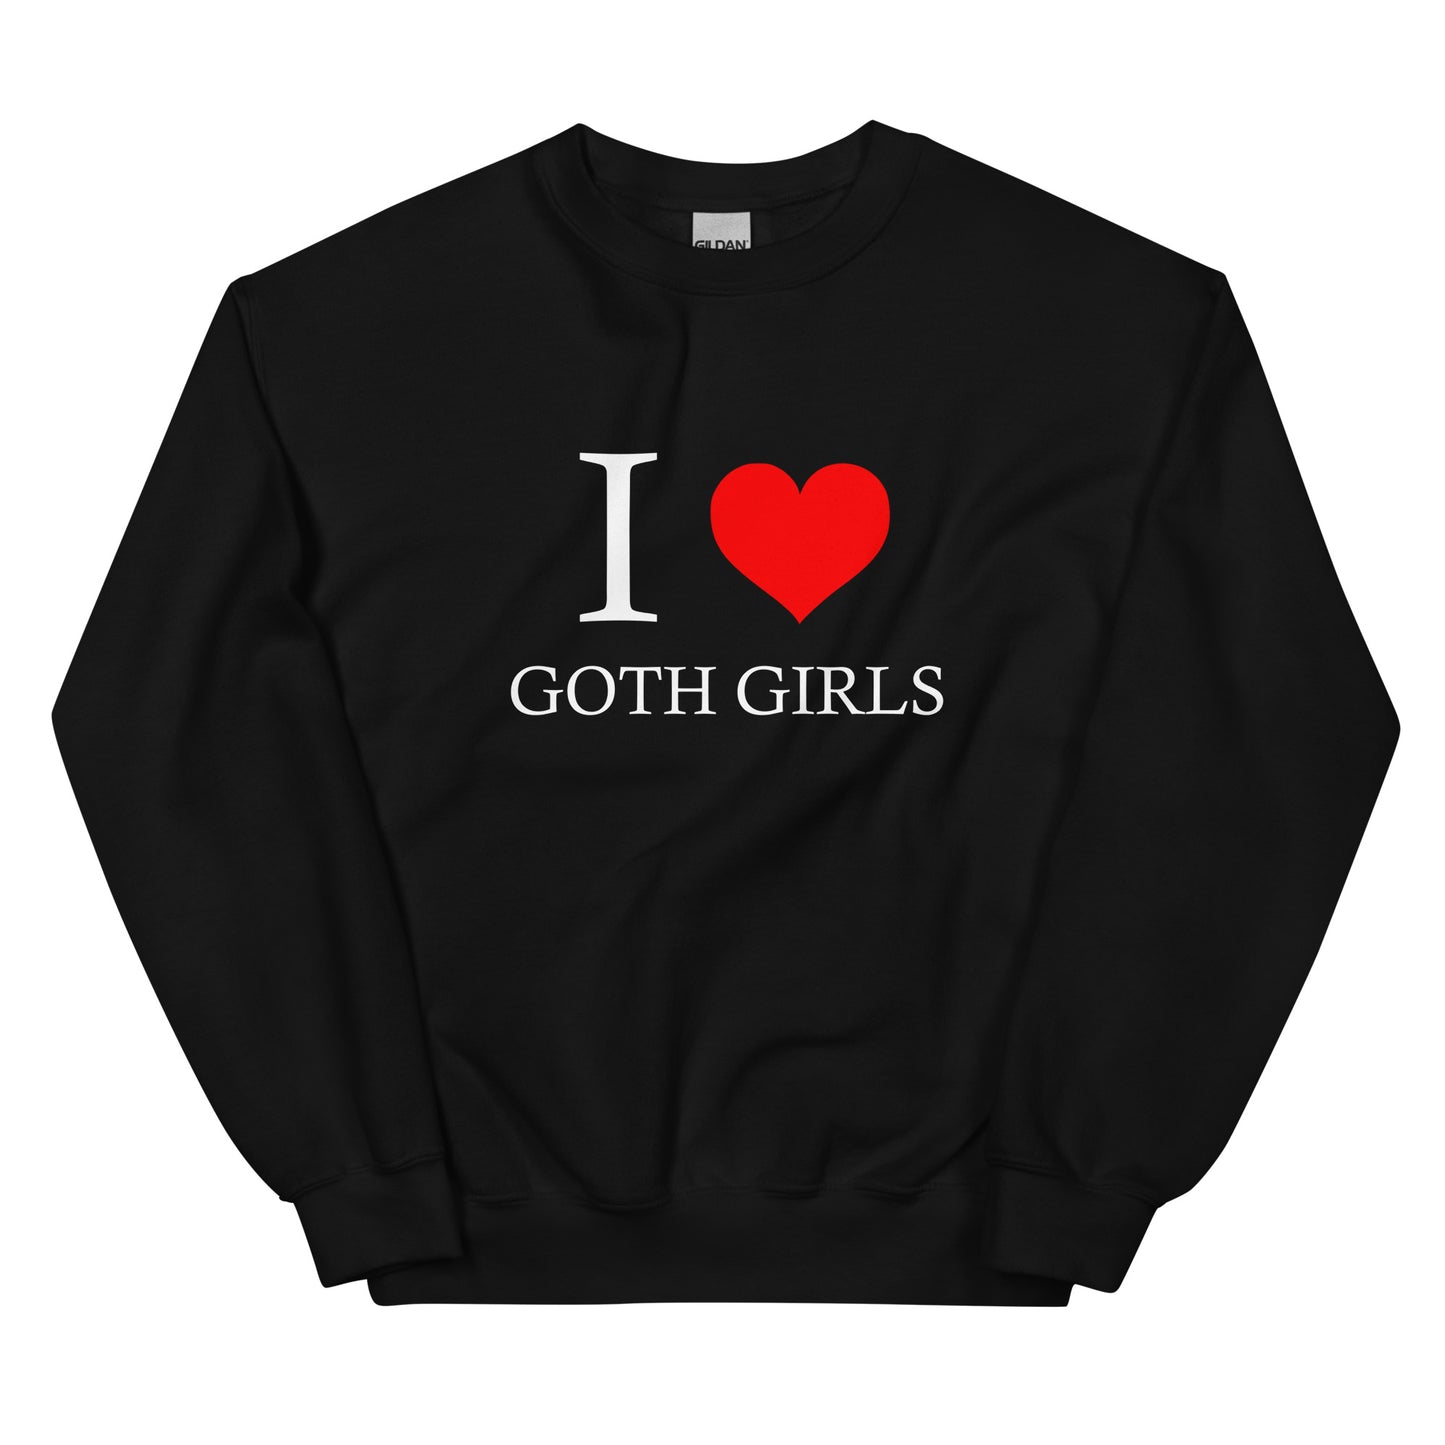 "I Love Goth Girls" Sweatshirt